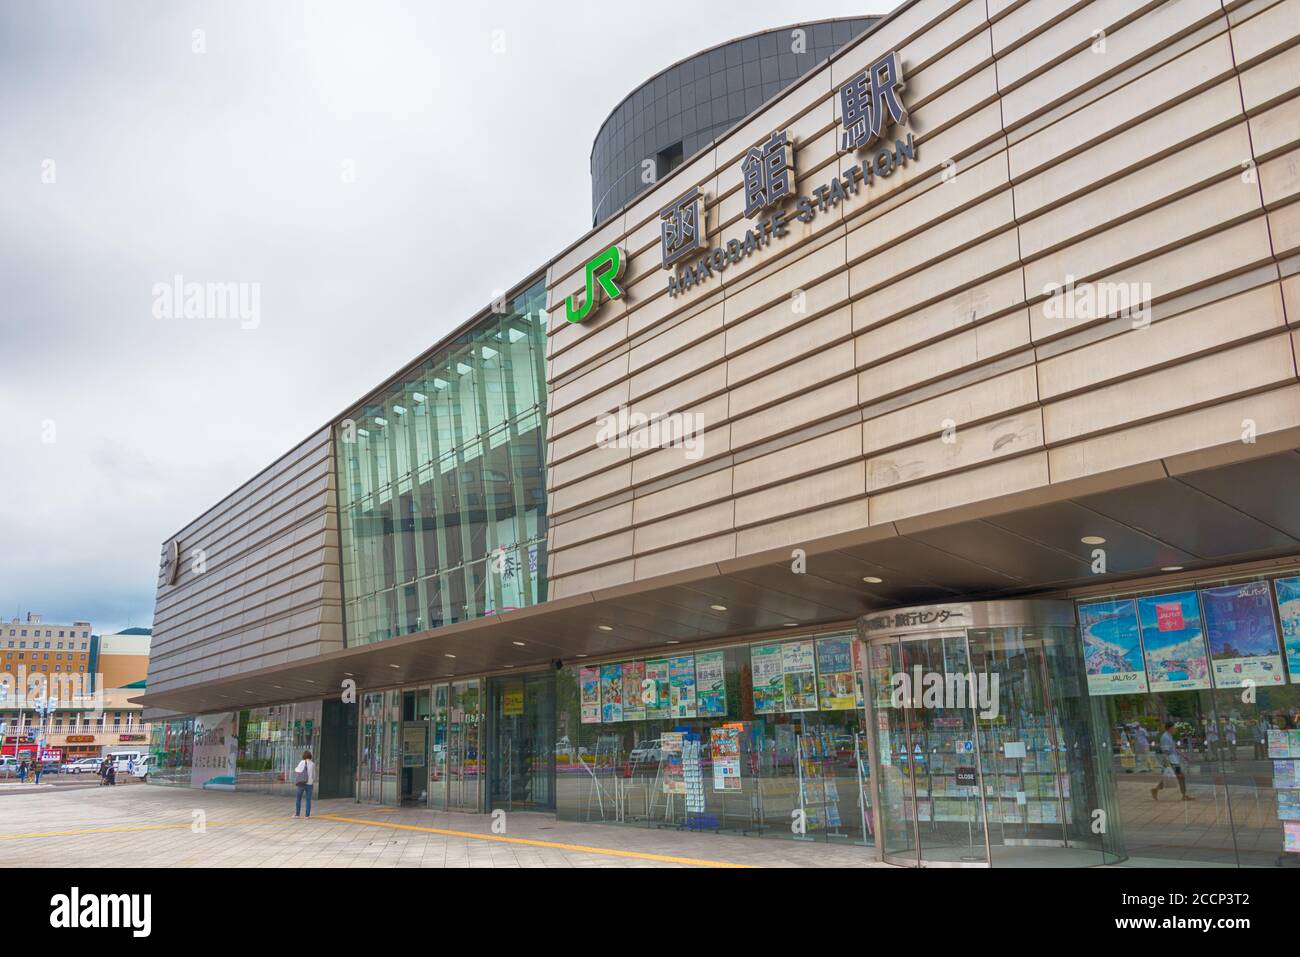 Japan Hokkaido Railway Station High Resolution Stock Photography And Images Alamy